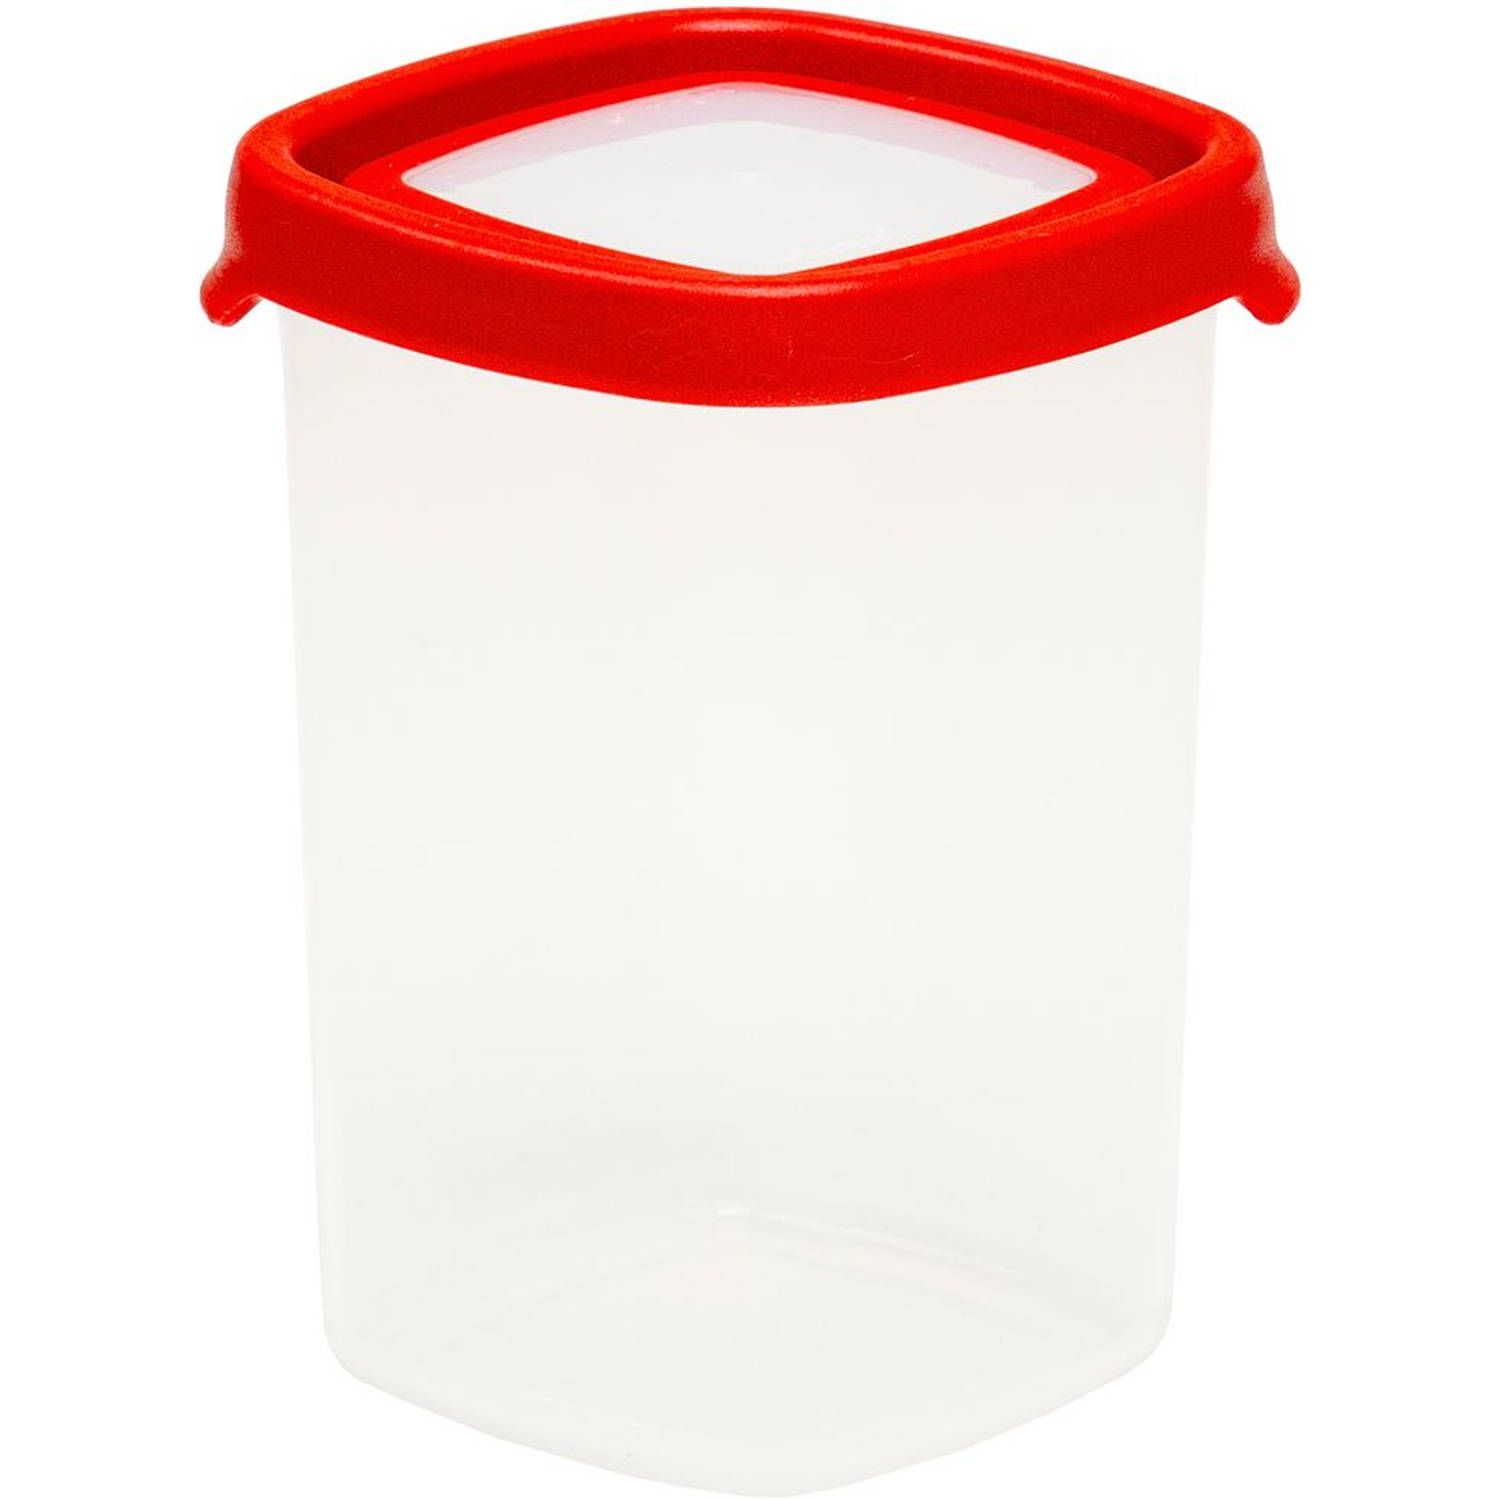 Wham - Opbergbox Seal It 980 ml Set van 3 Stuks - Polypropyleen - Transparant